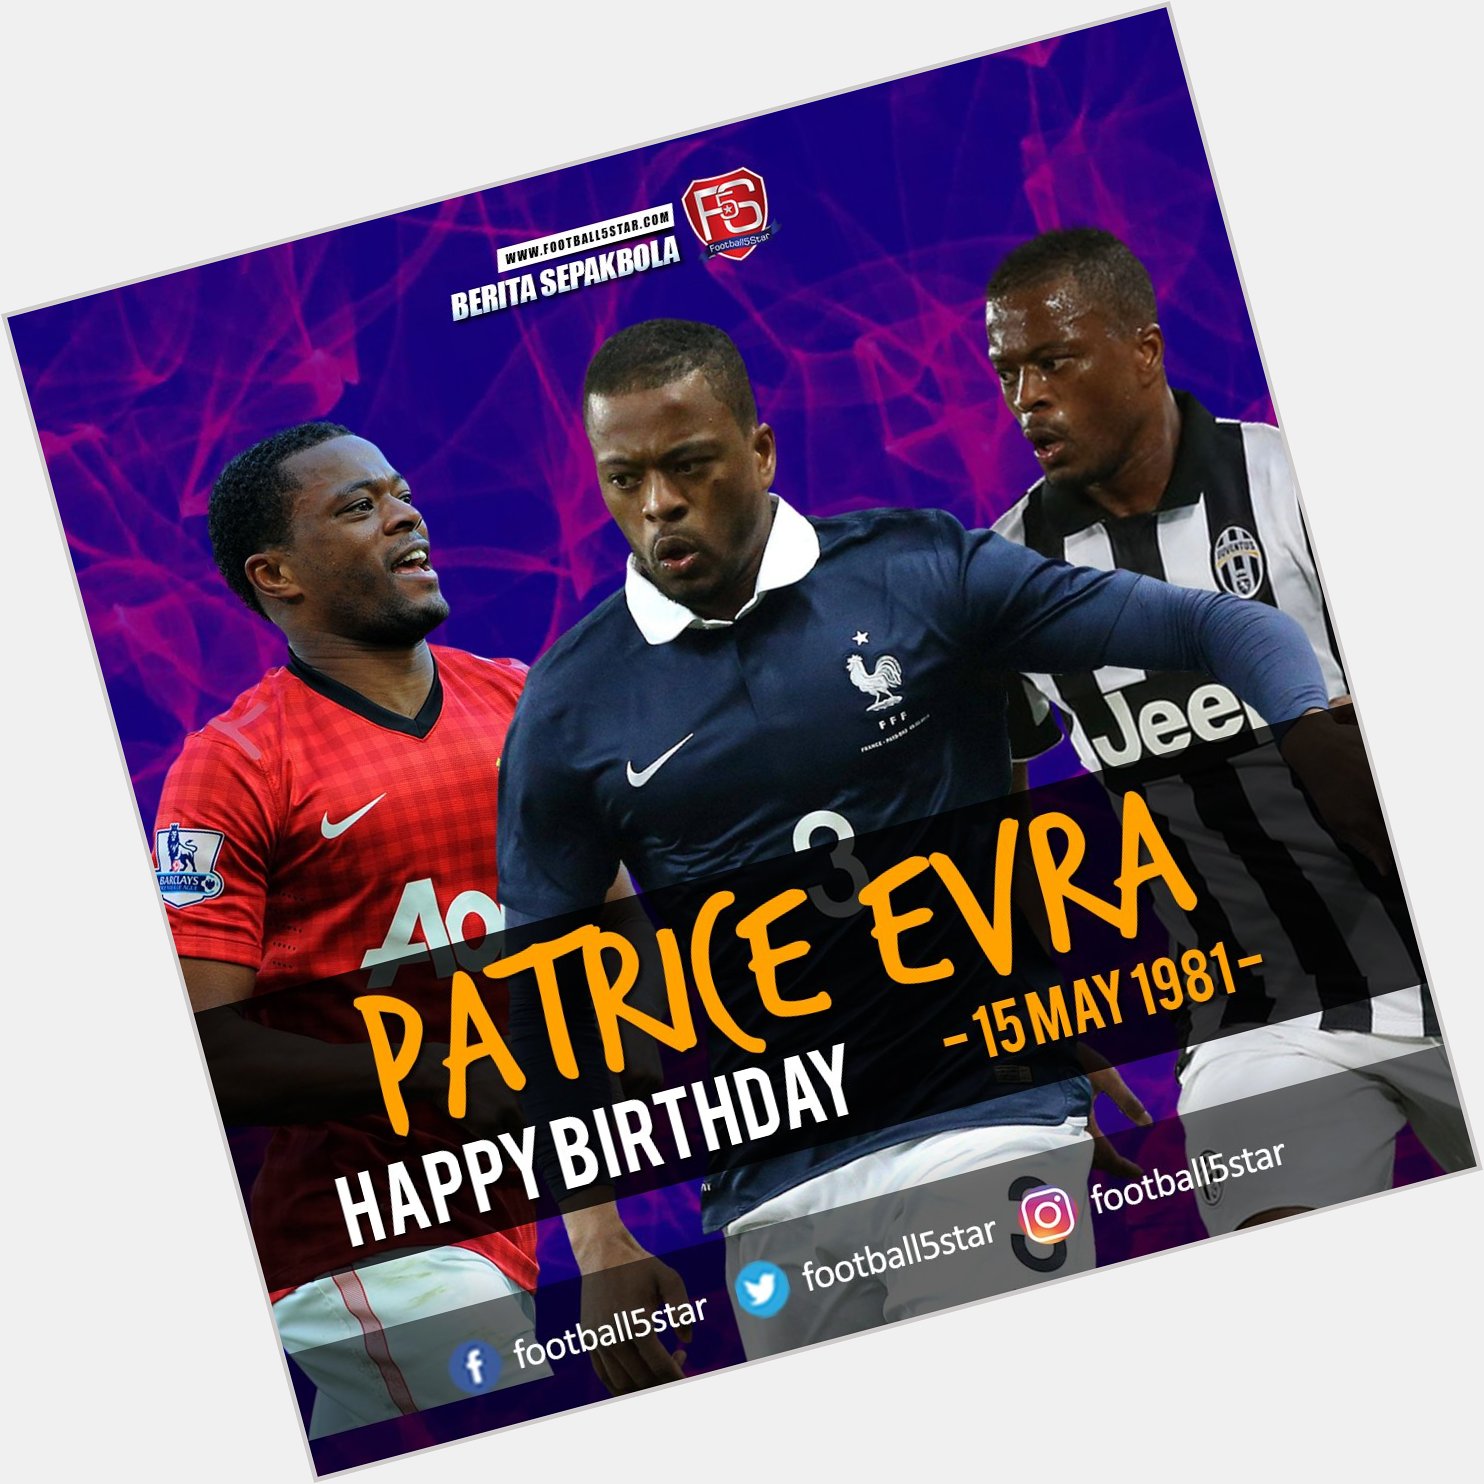 Happy Birthday Patrice Evra 15 May 1981 